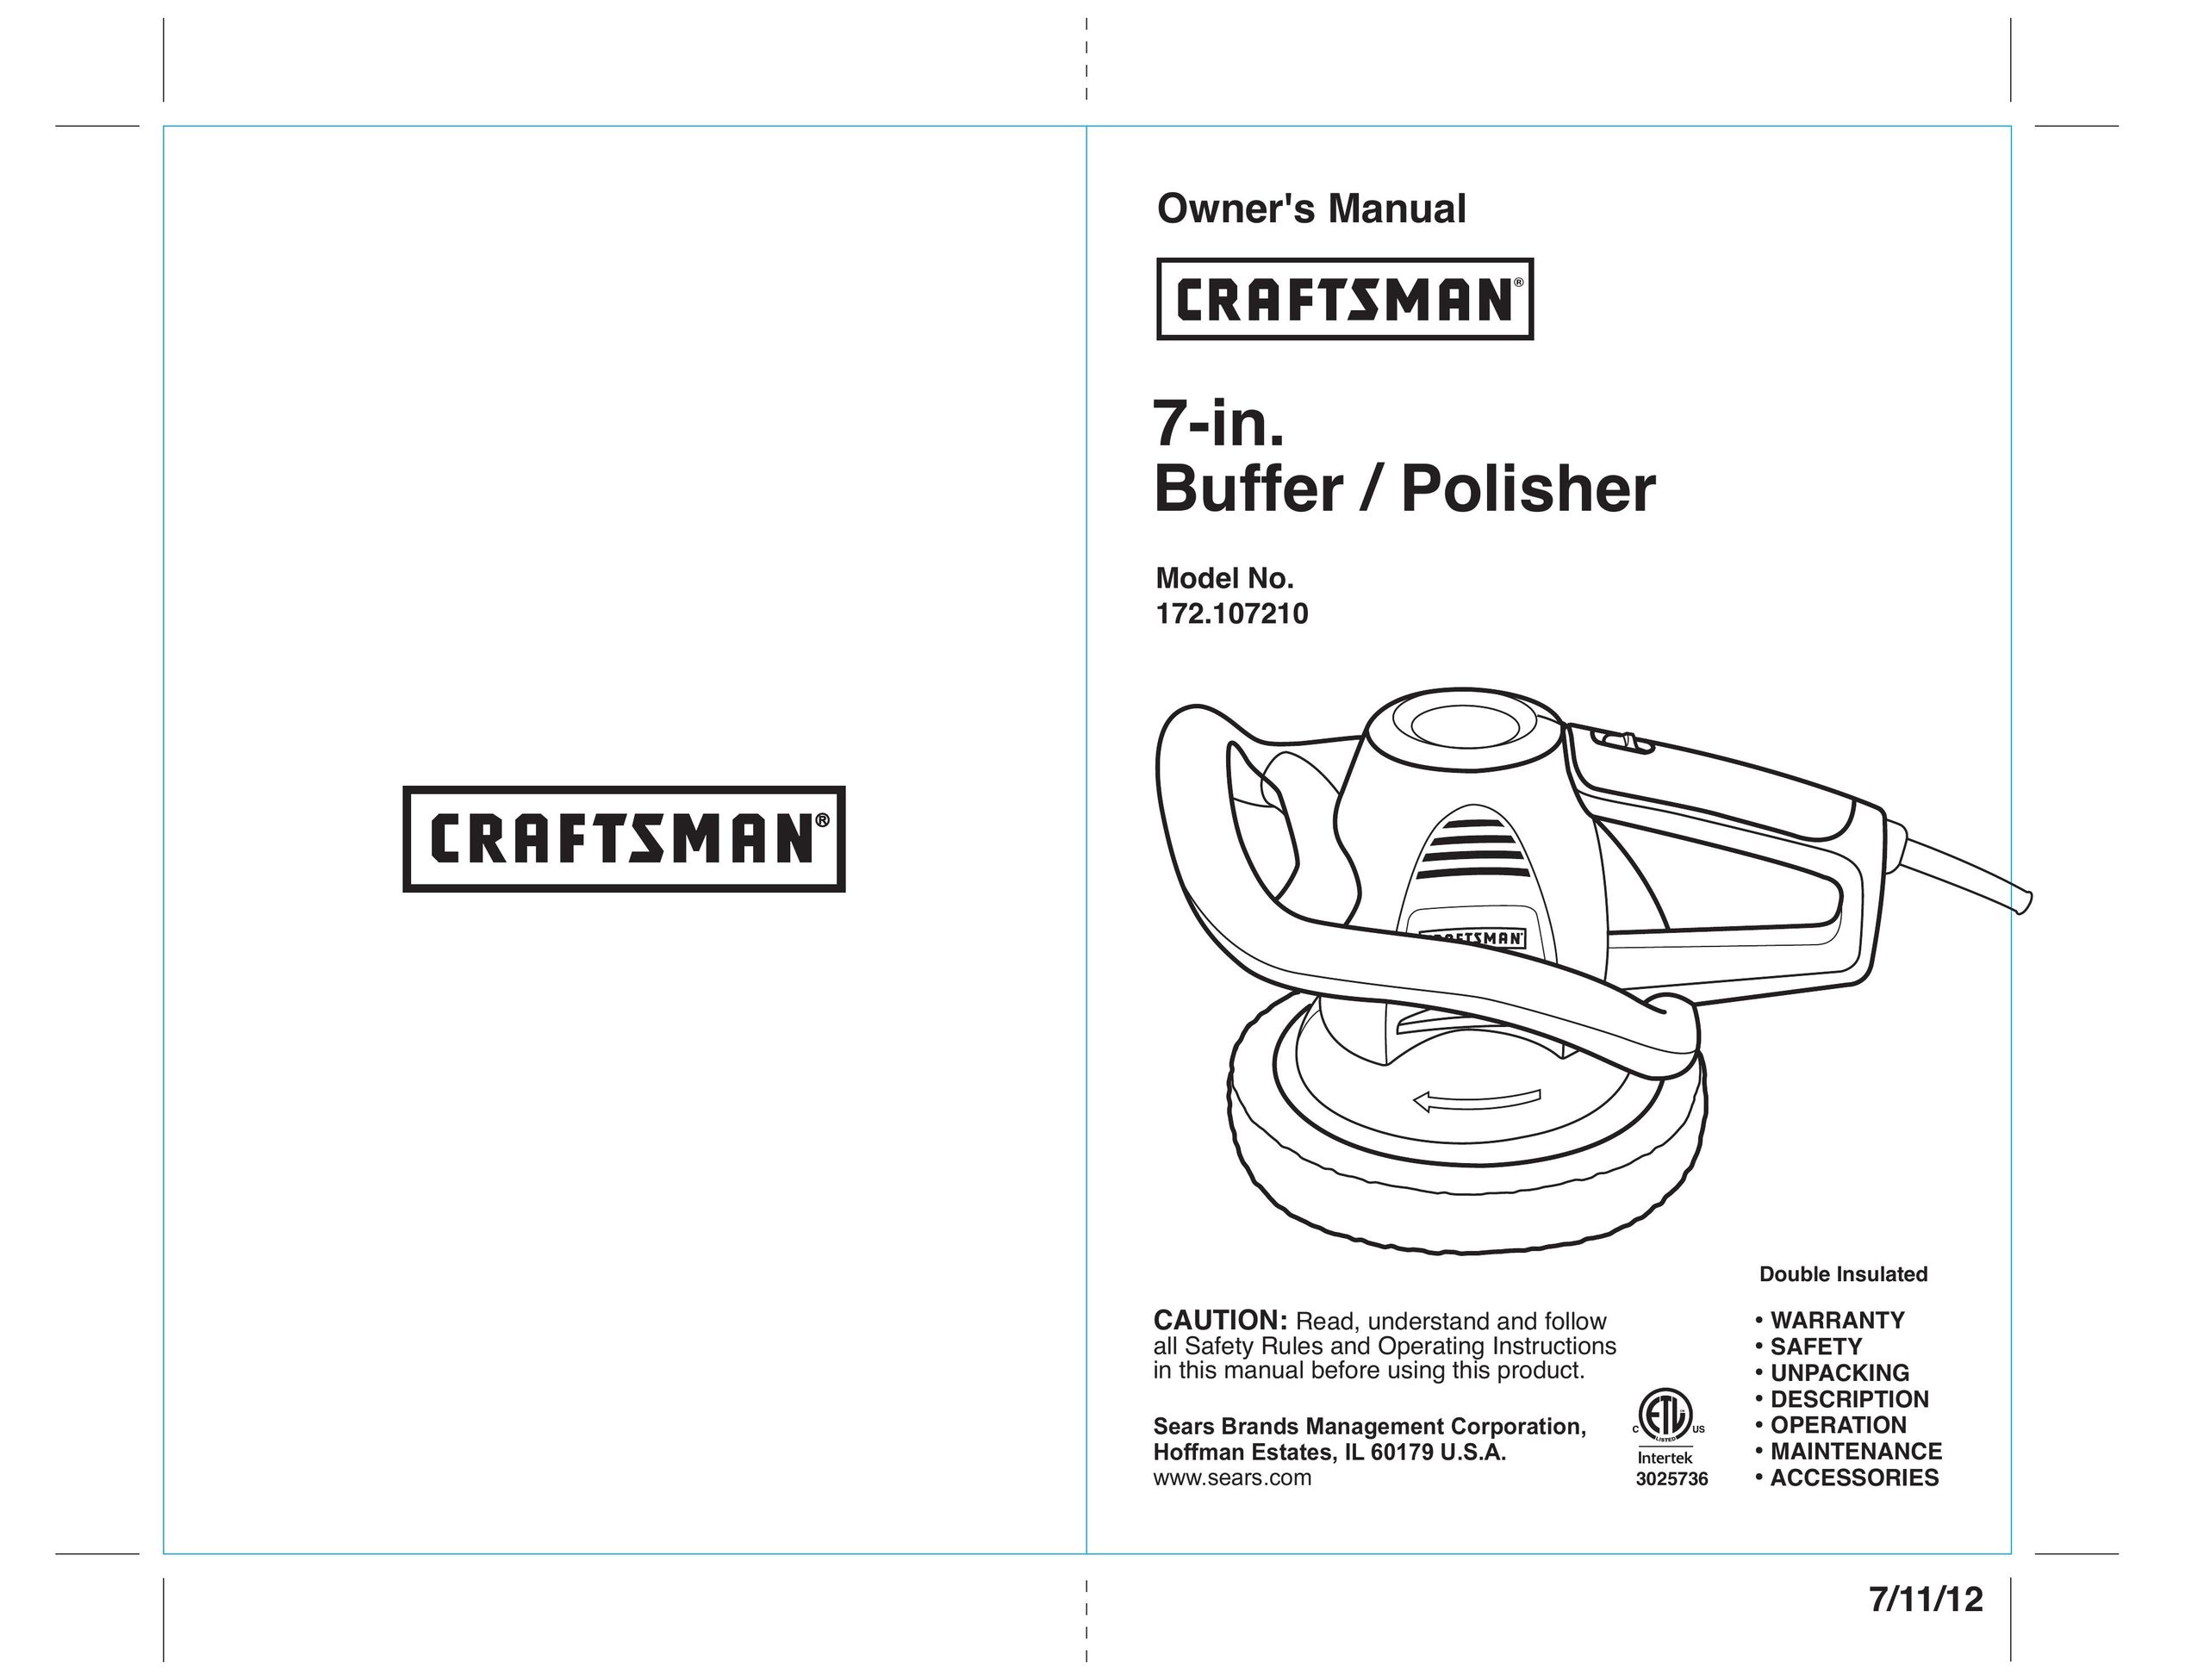 Craftsman 172.10721 Cordless Sander User Manual